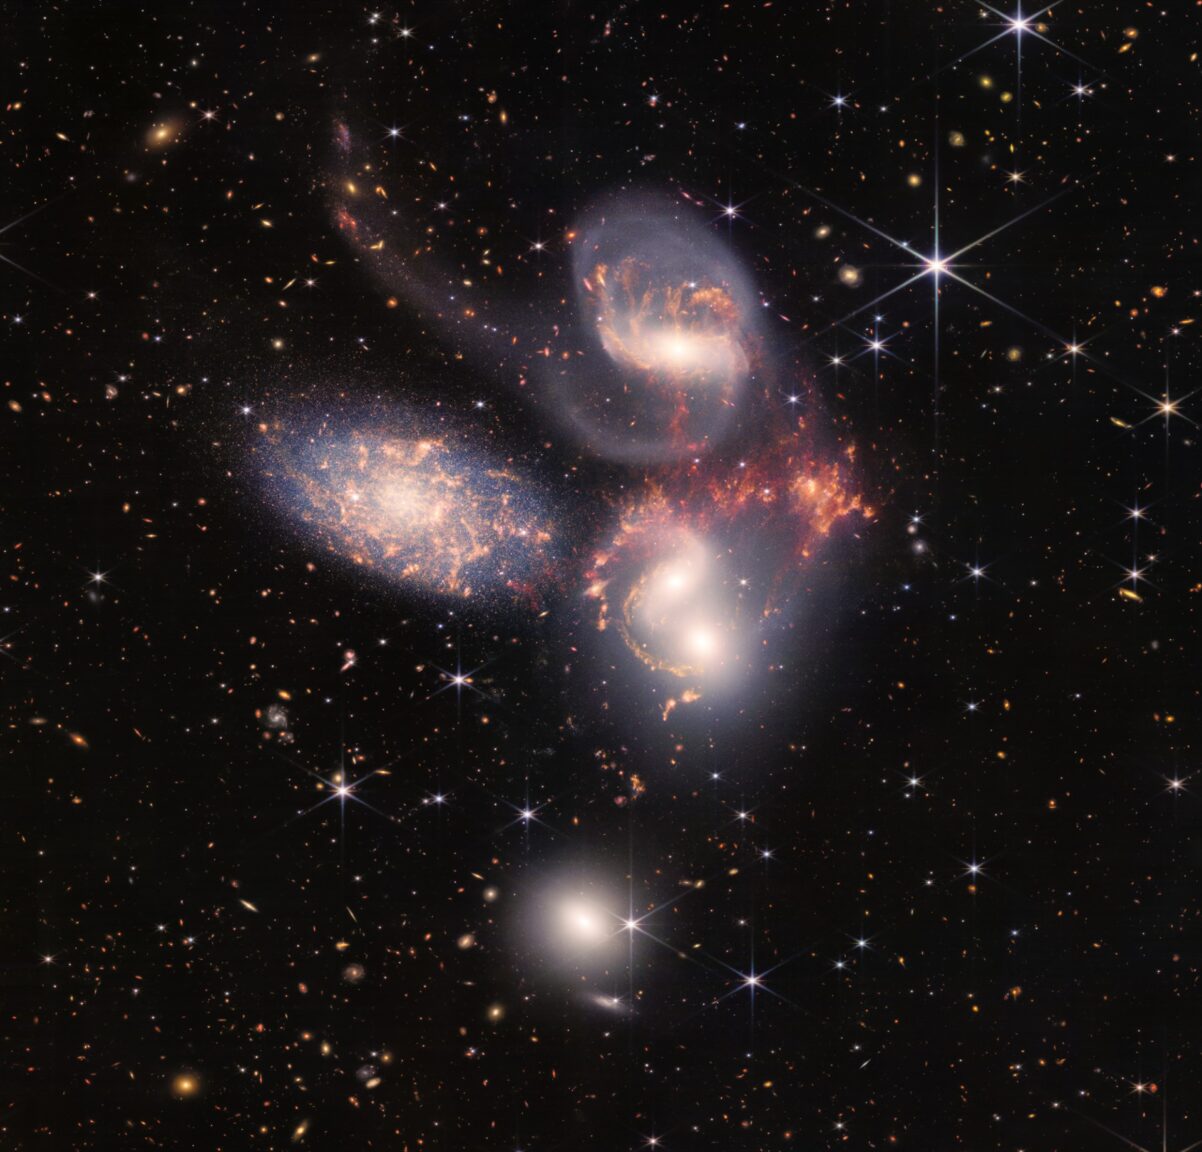 James Webb image shows galaxies locked in an intersellar dance